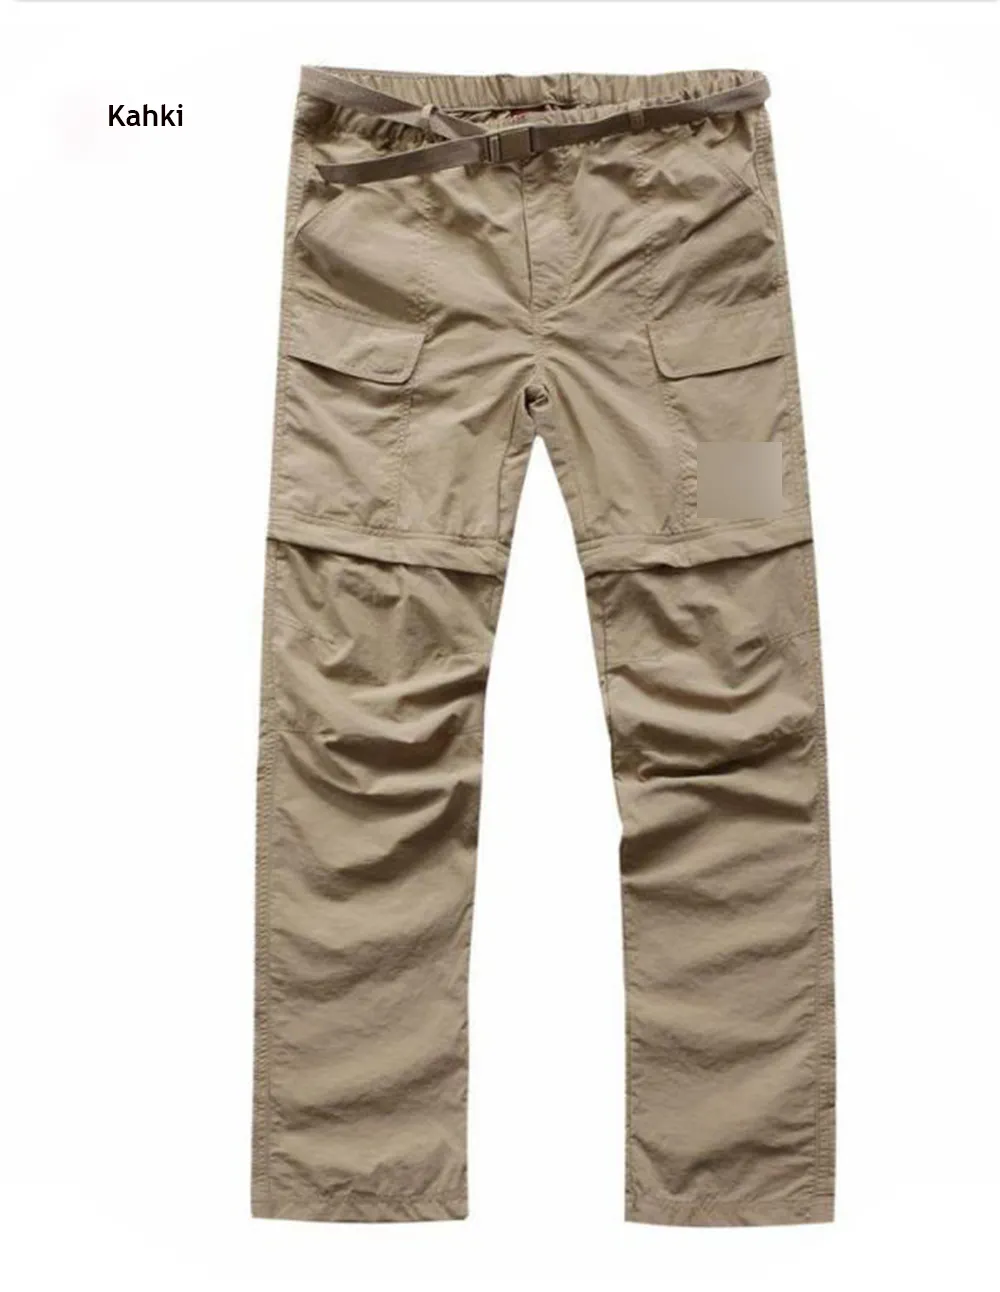 Men's Hiking Pants Convertible Quick Dry Lightweight Zip-Off Outdoor Travel Camping Fishing Pants